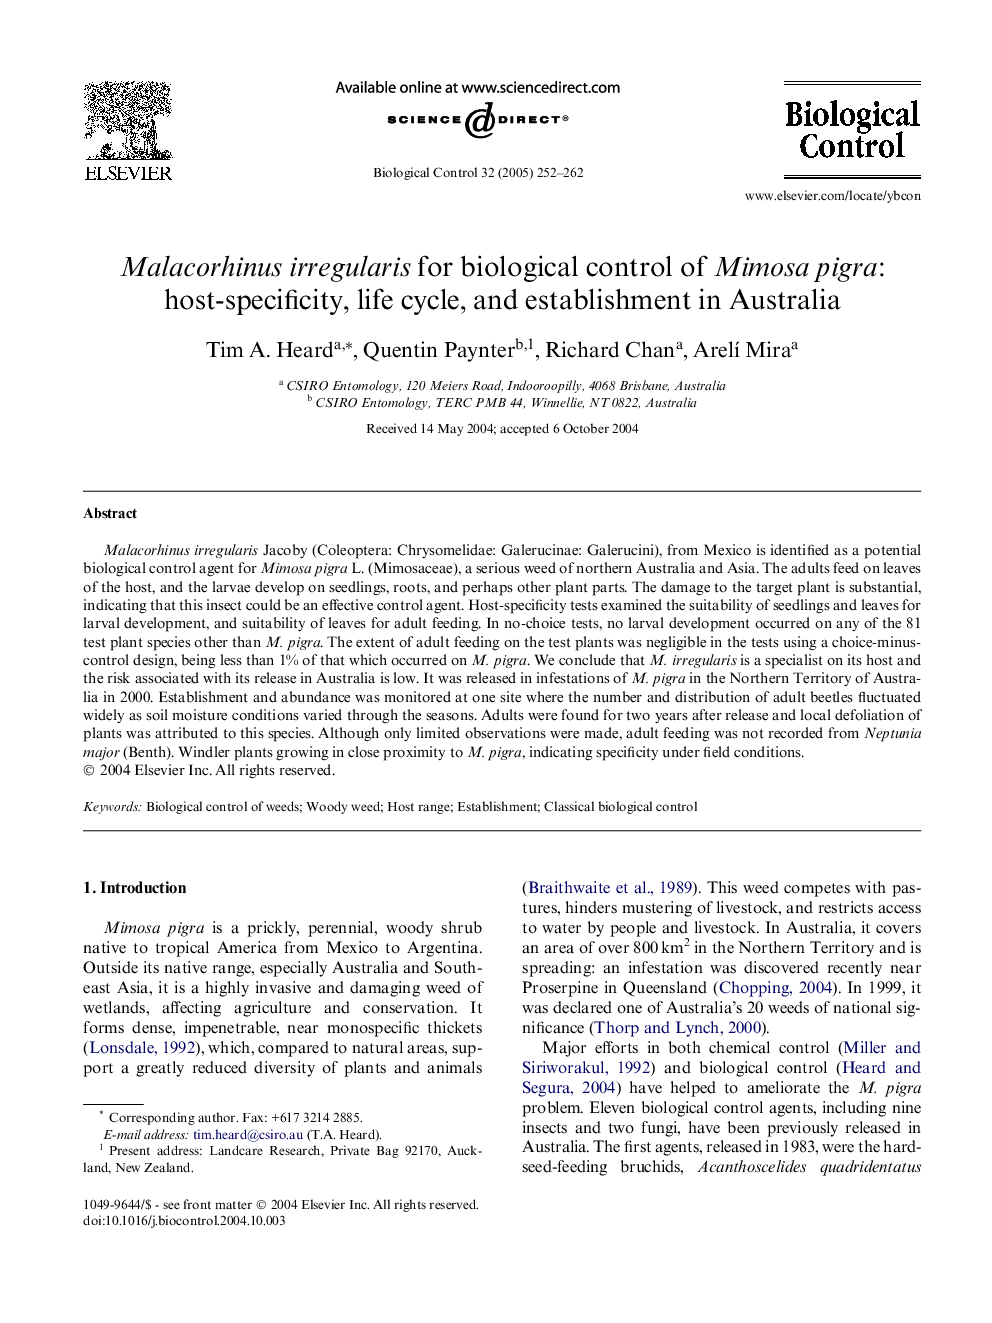 Malacorhinus irregularis for biological control of Mimosa pigra: host-specificity, life cycle, and establishment in Australia